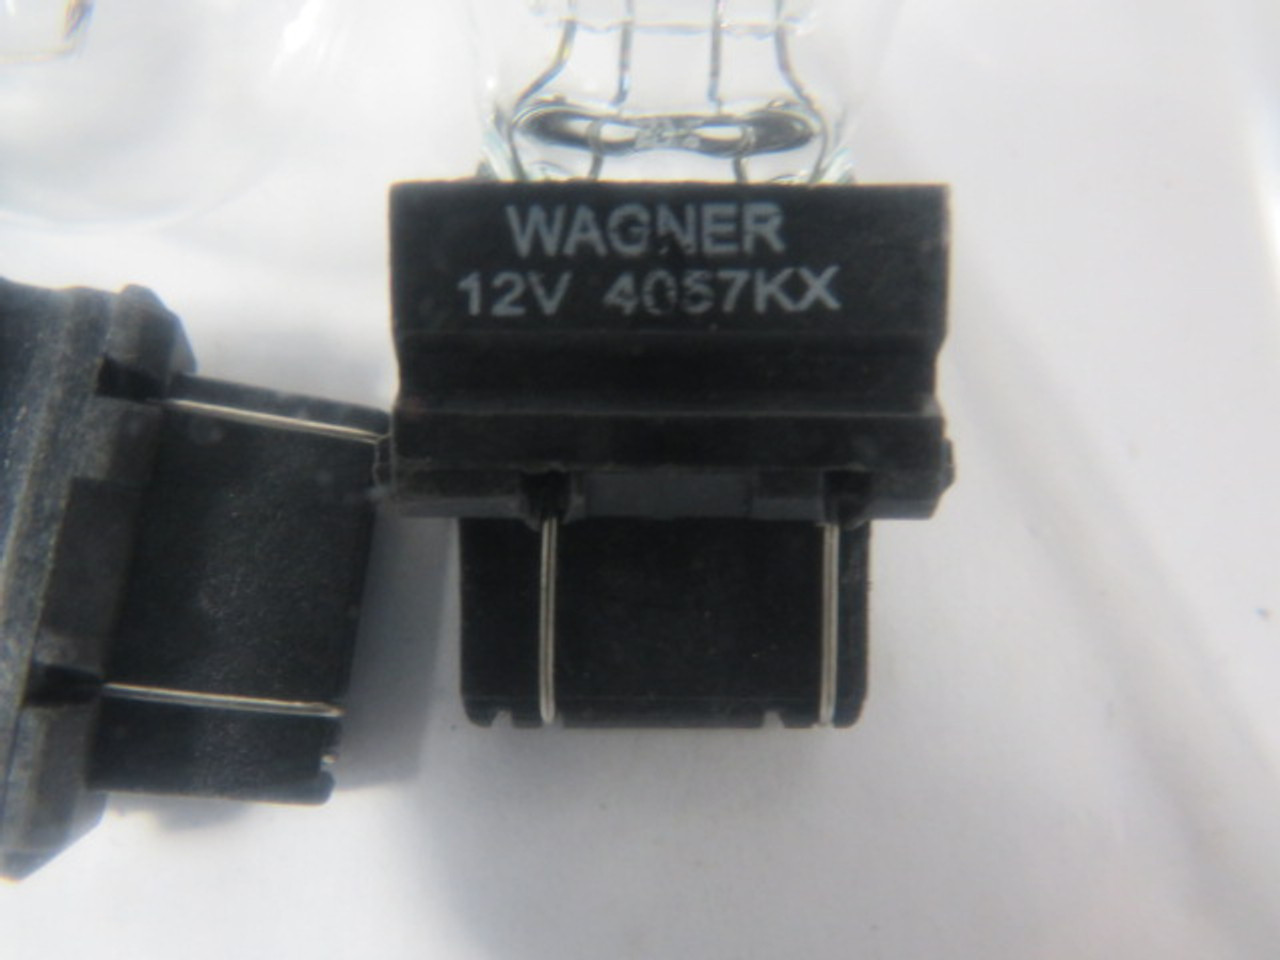 Wagner 4057KX Long Life Miniature Automotive Tail Lamp Lot of 5 ! NOP !